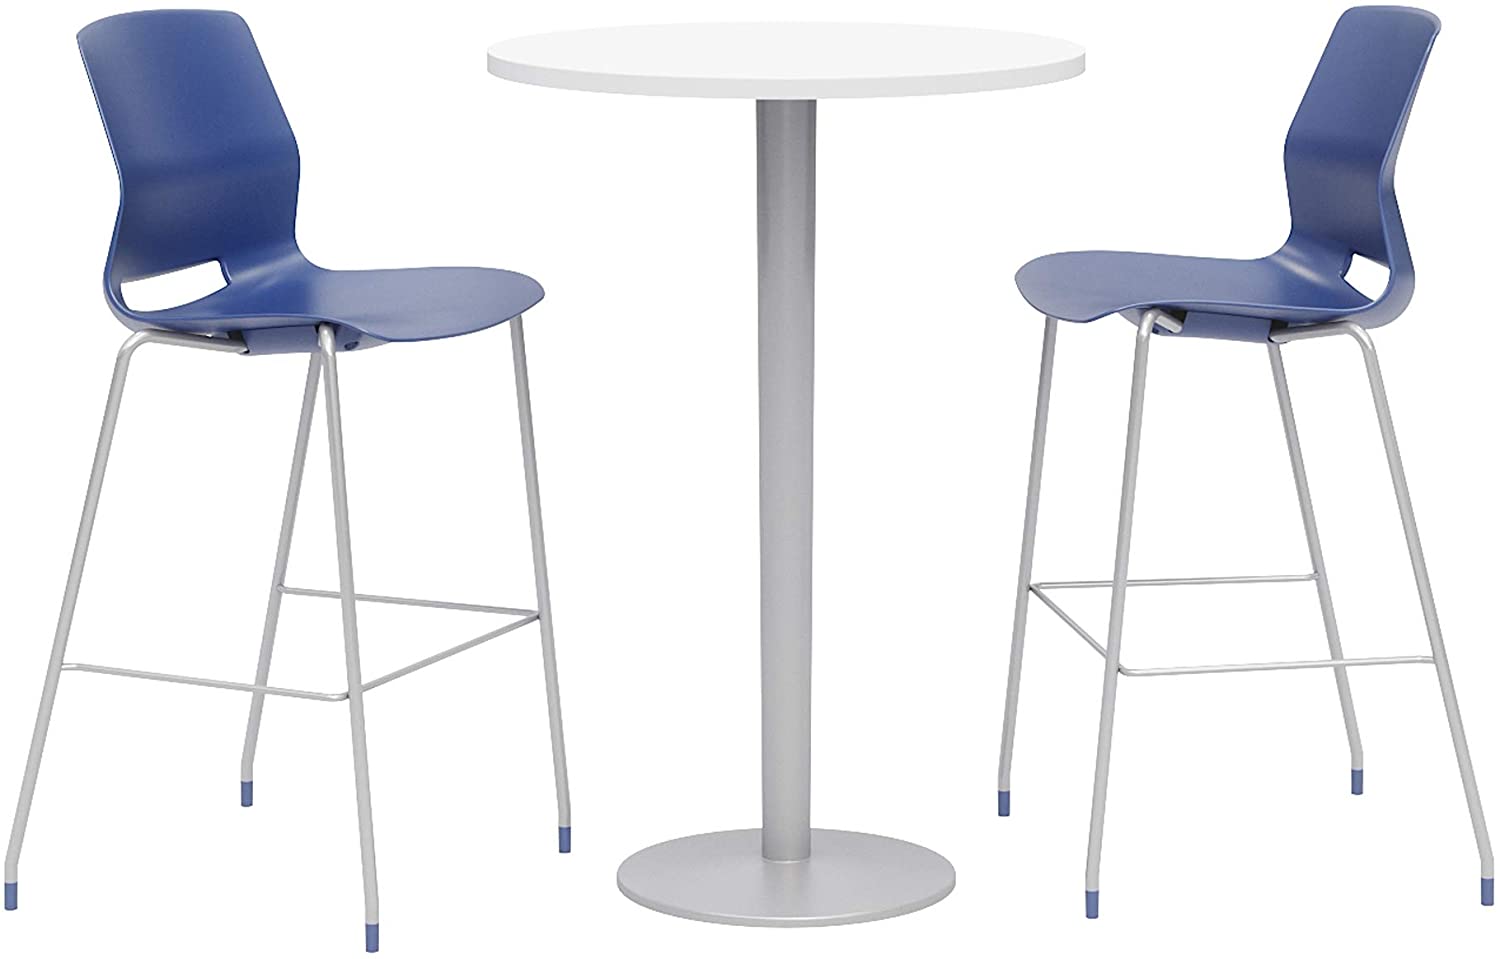 B0892VKBMY Olio Designs Dining Room Furniture, Designer White Table, Navy Stools